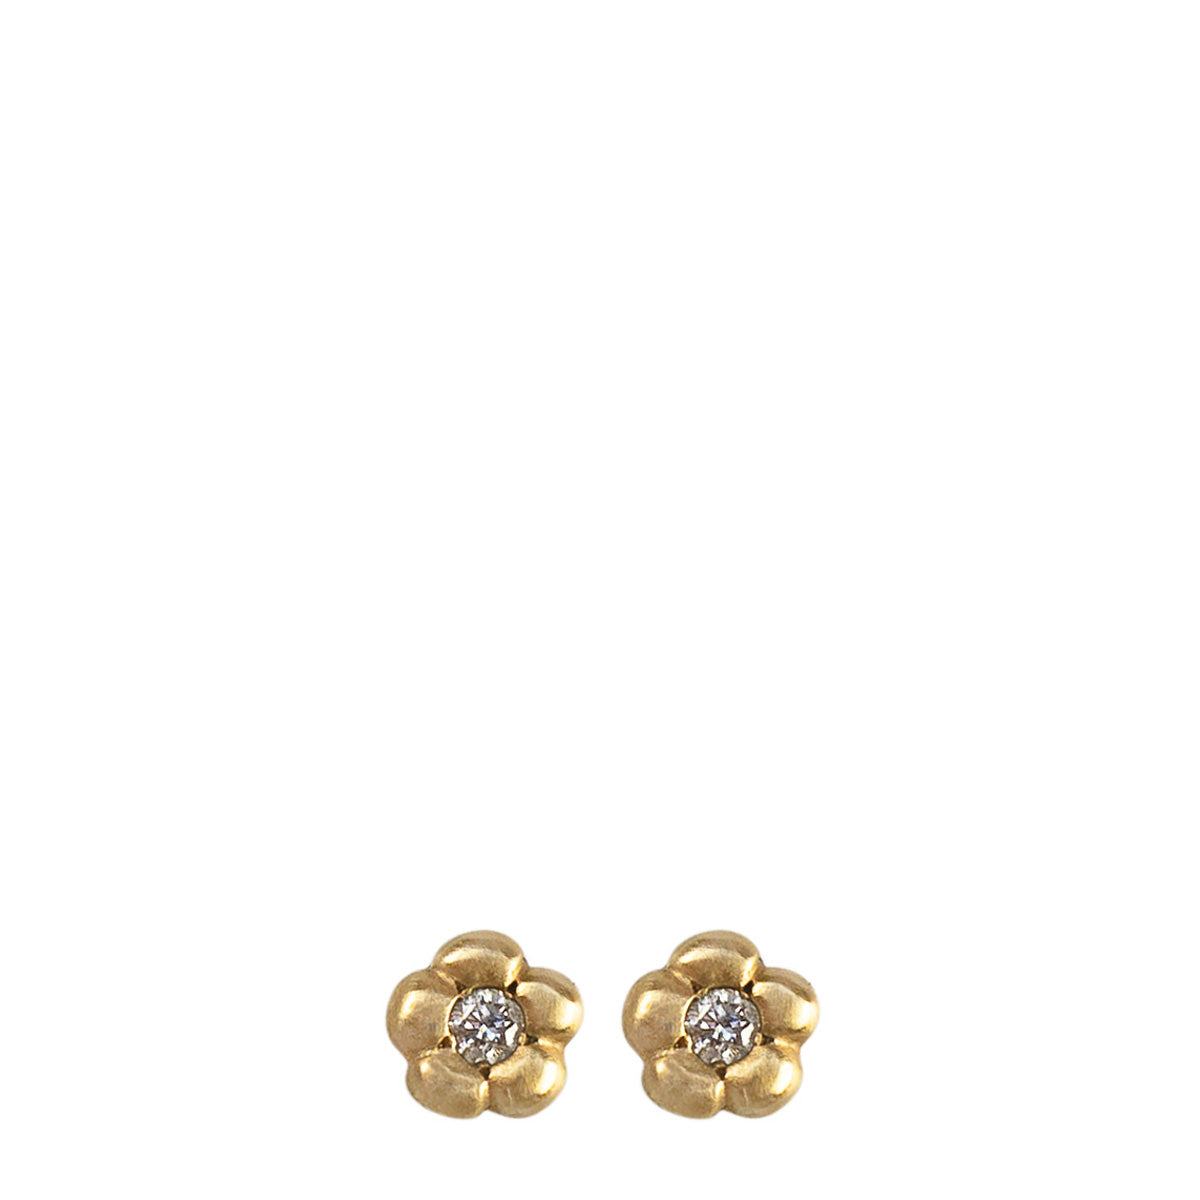 10K Gold Daisy Flower Stud Earrings with Diamond